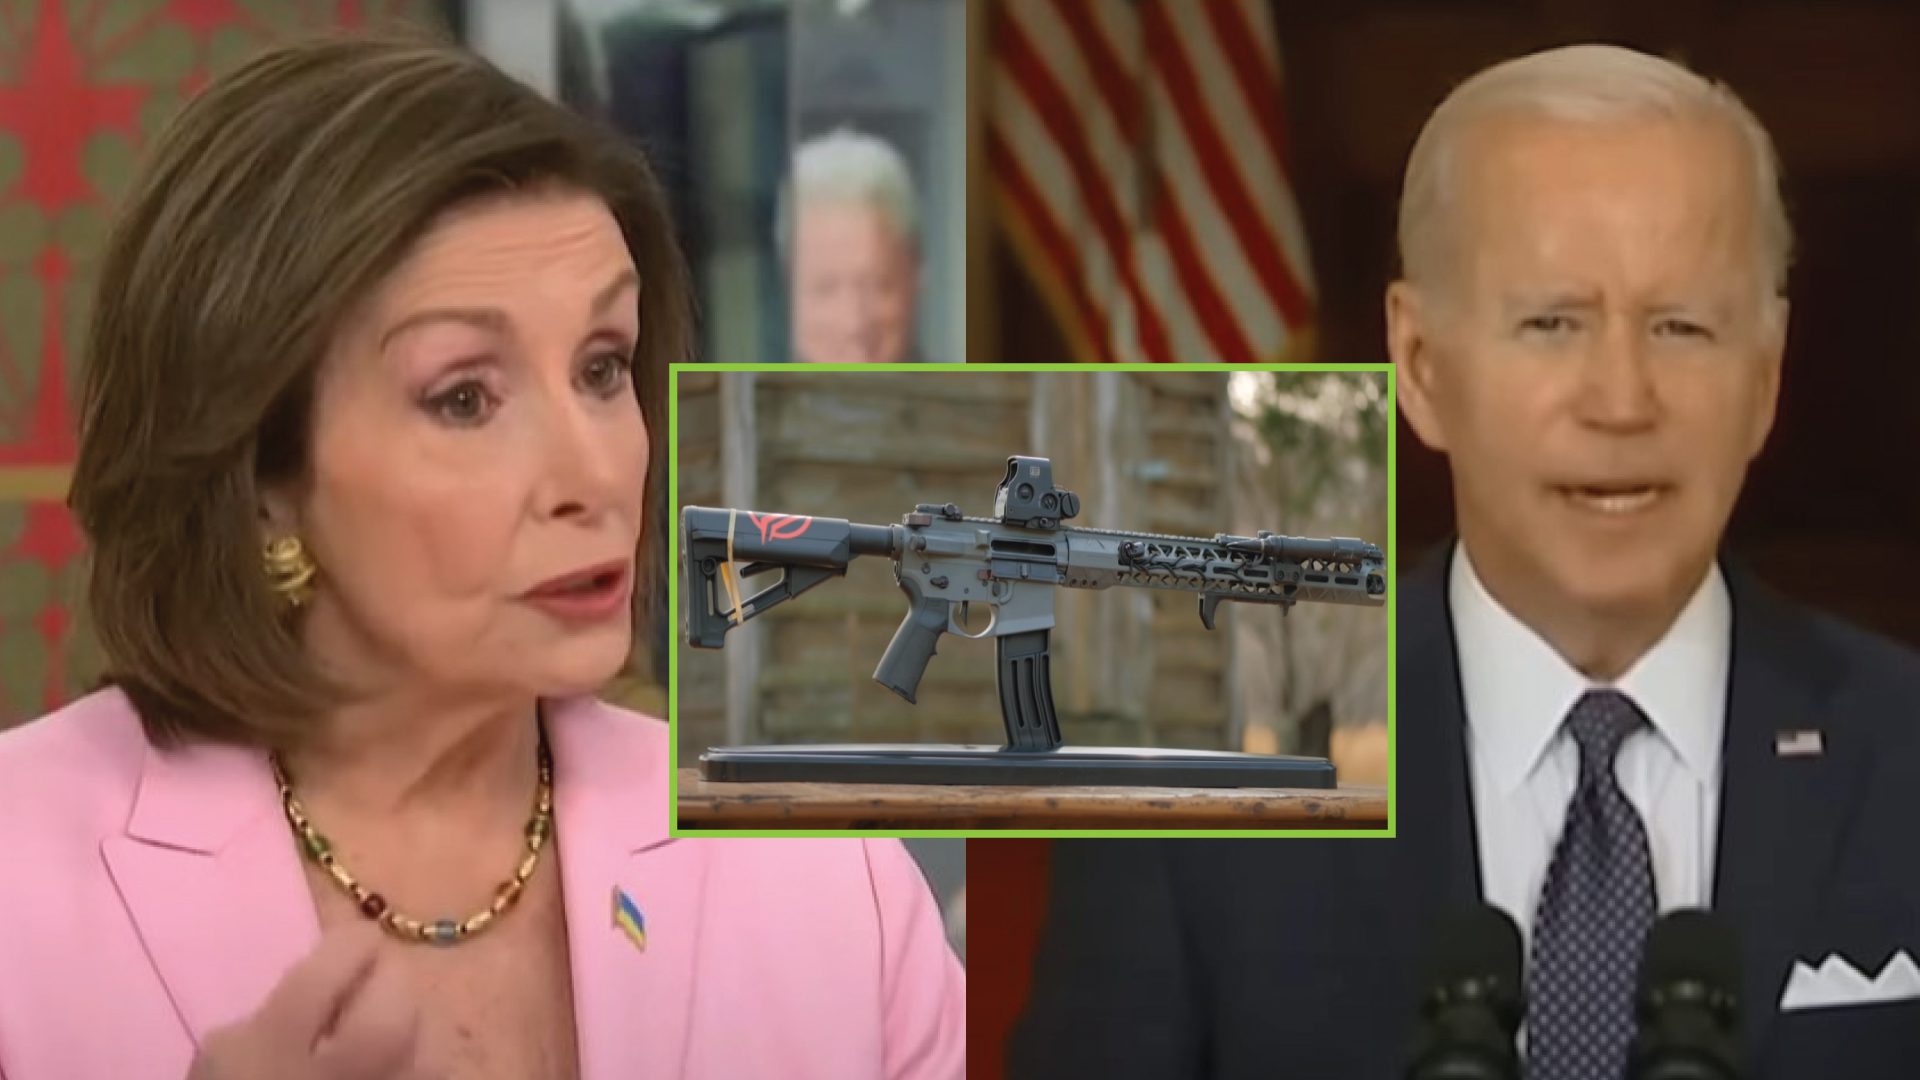 Democrat congressman proposes 1000% tax on AR-15 rifles